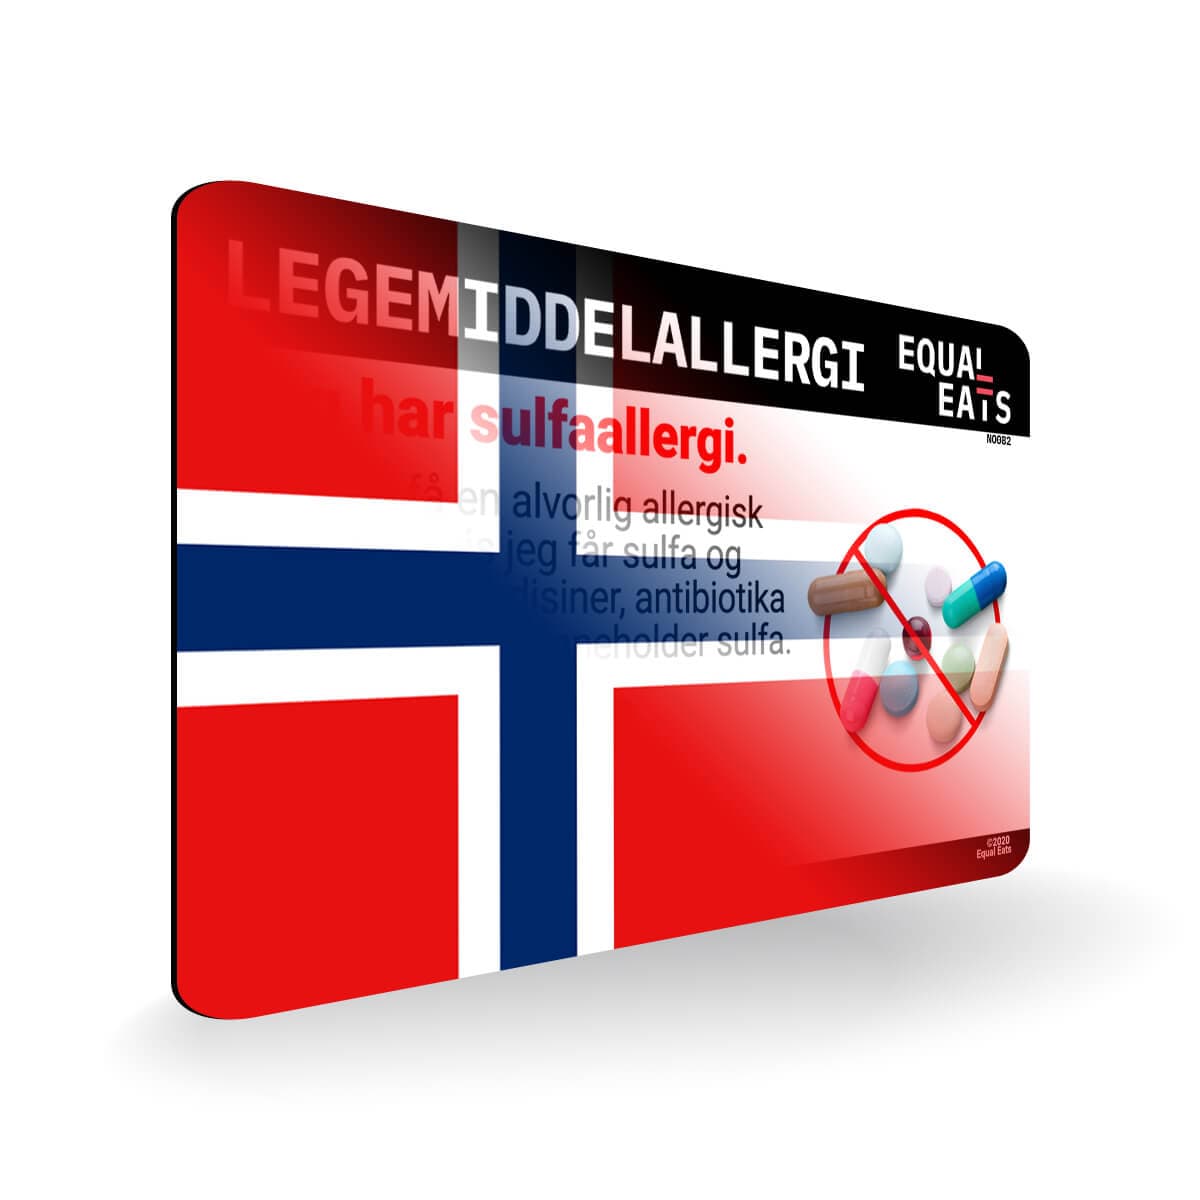 Sulfa Allergy in Norwegian. Sulfa Medicine Allergy Card for Norway